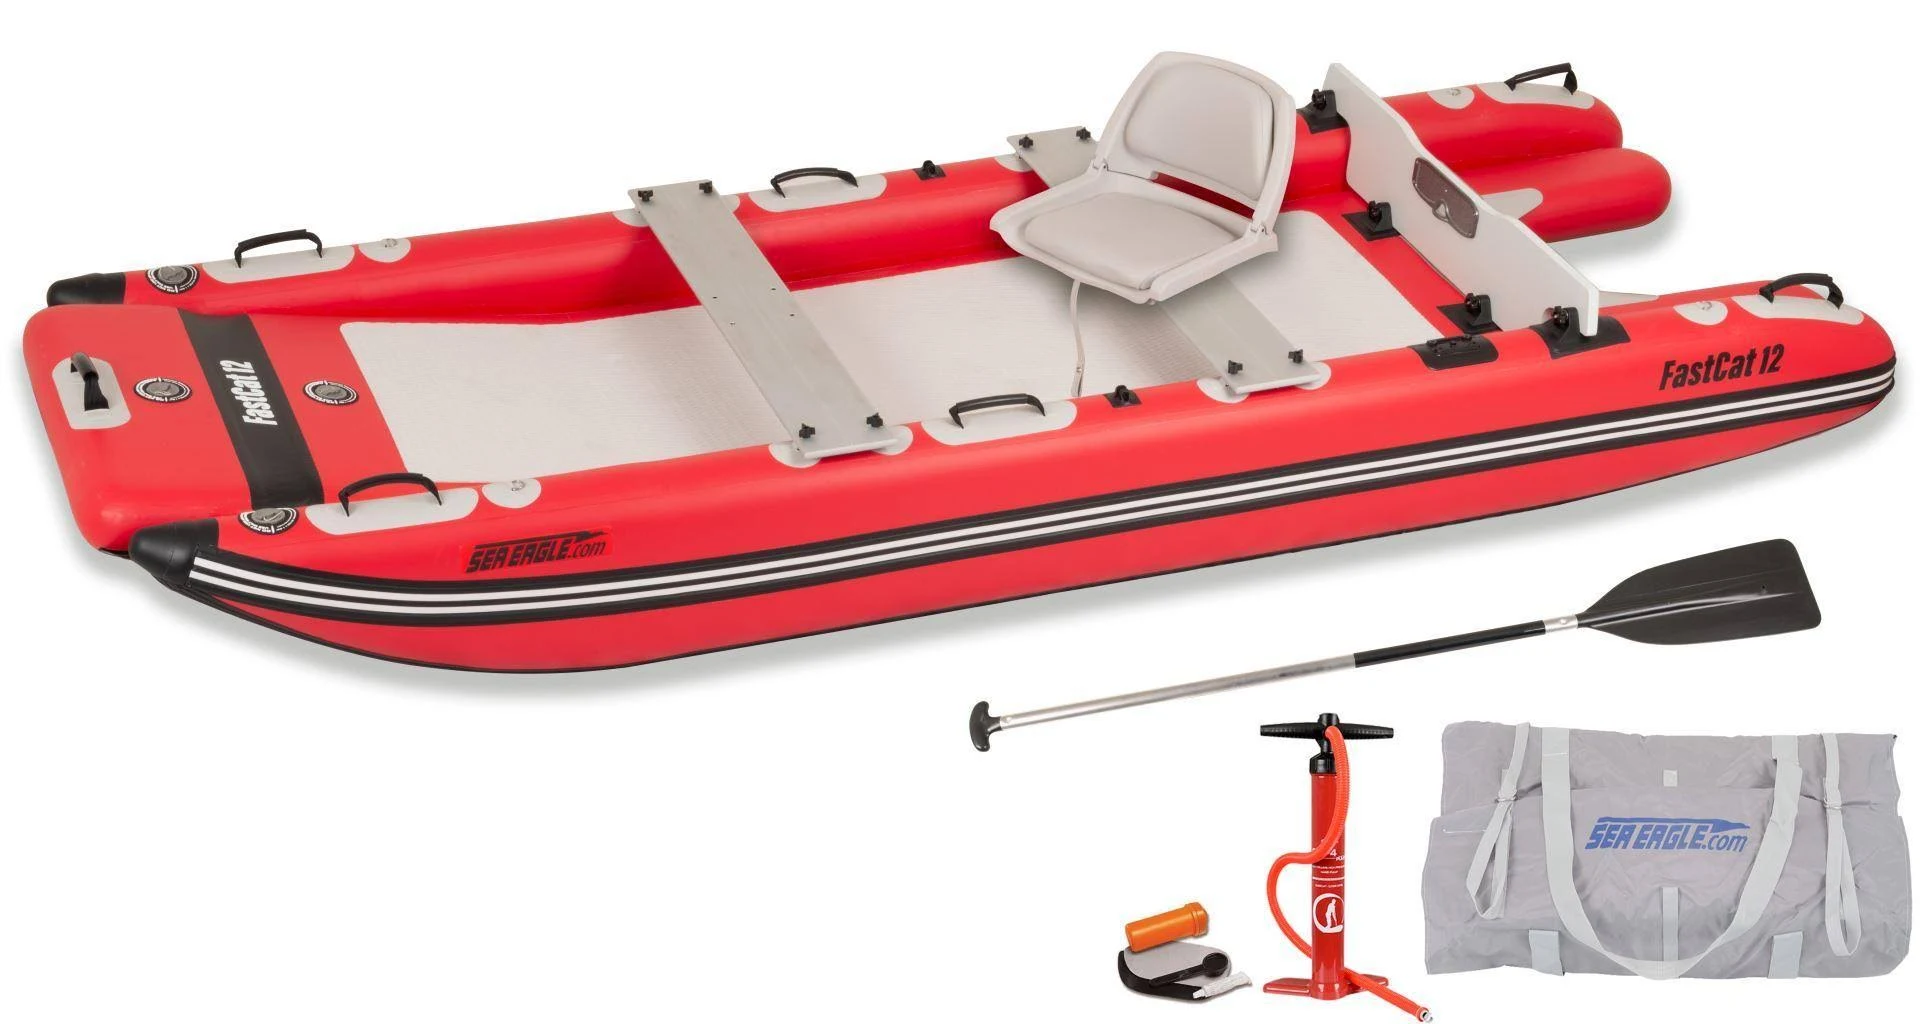 Sea Eagle FastCat12 Inflatable Catamaran Boat – Swivel Seat Canopy Package